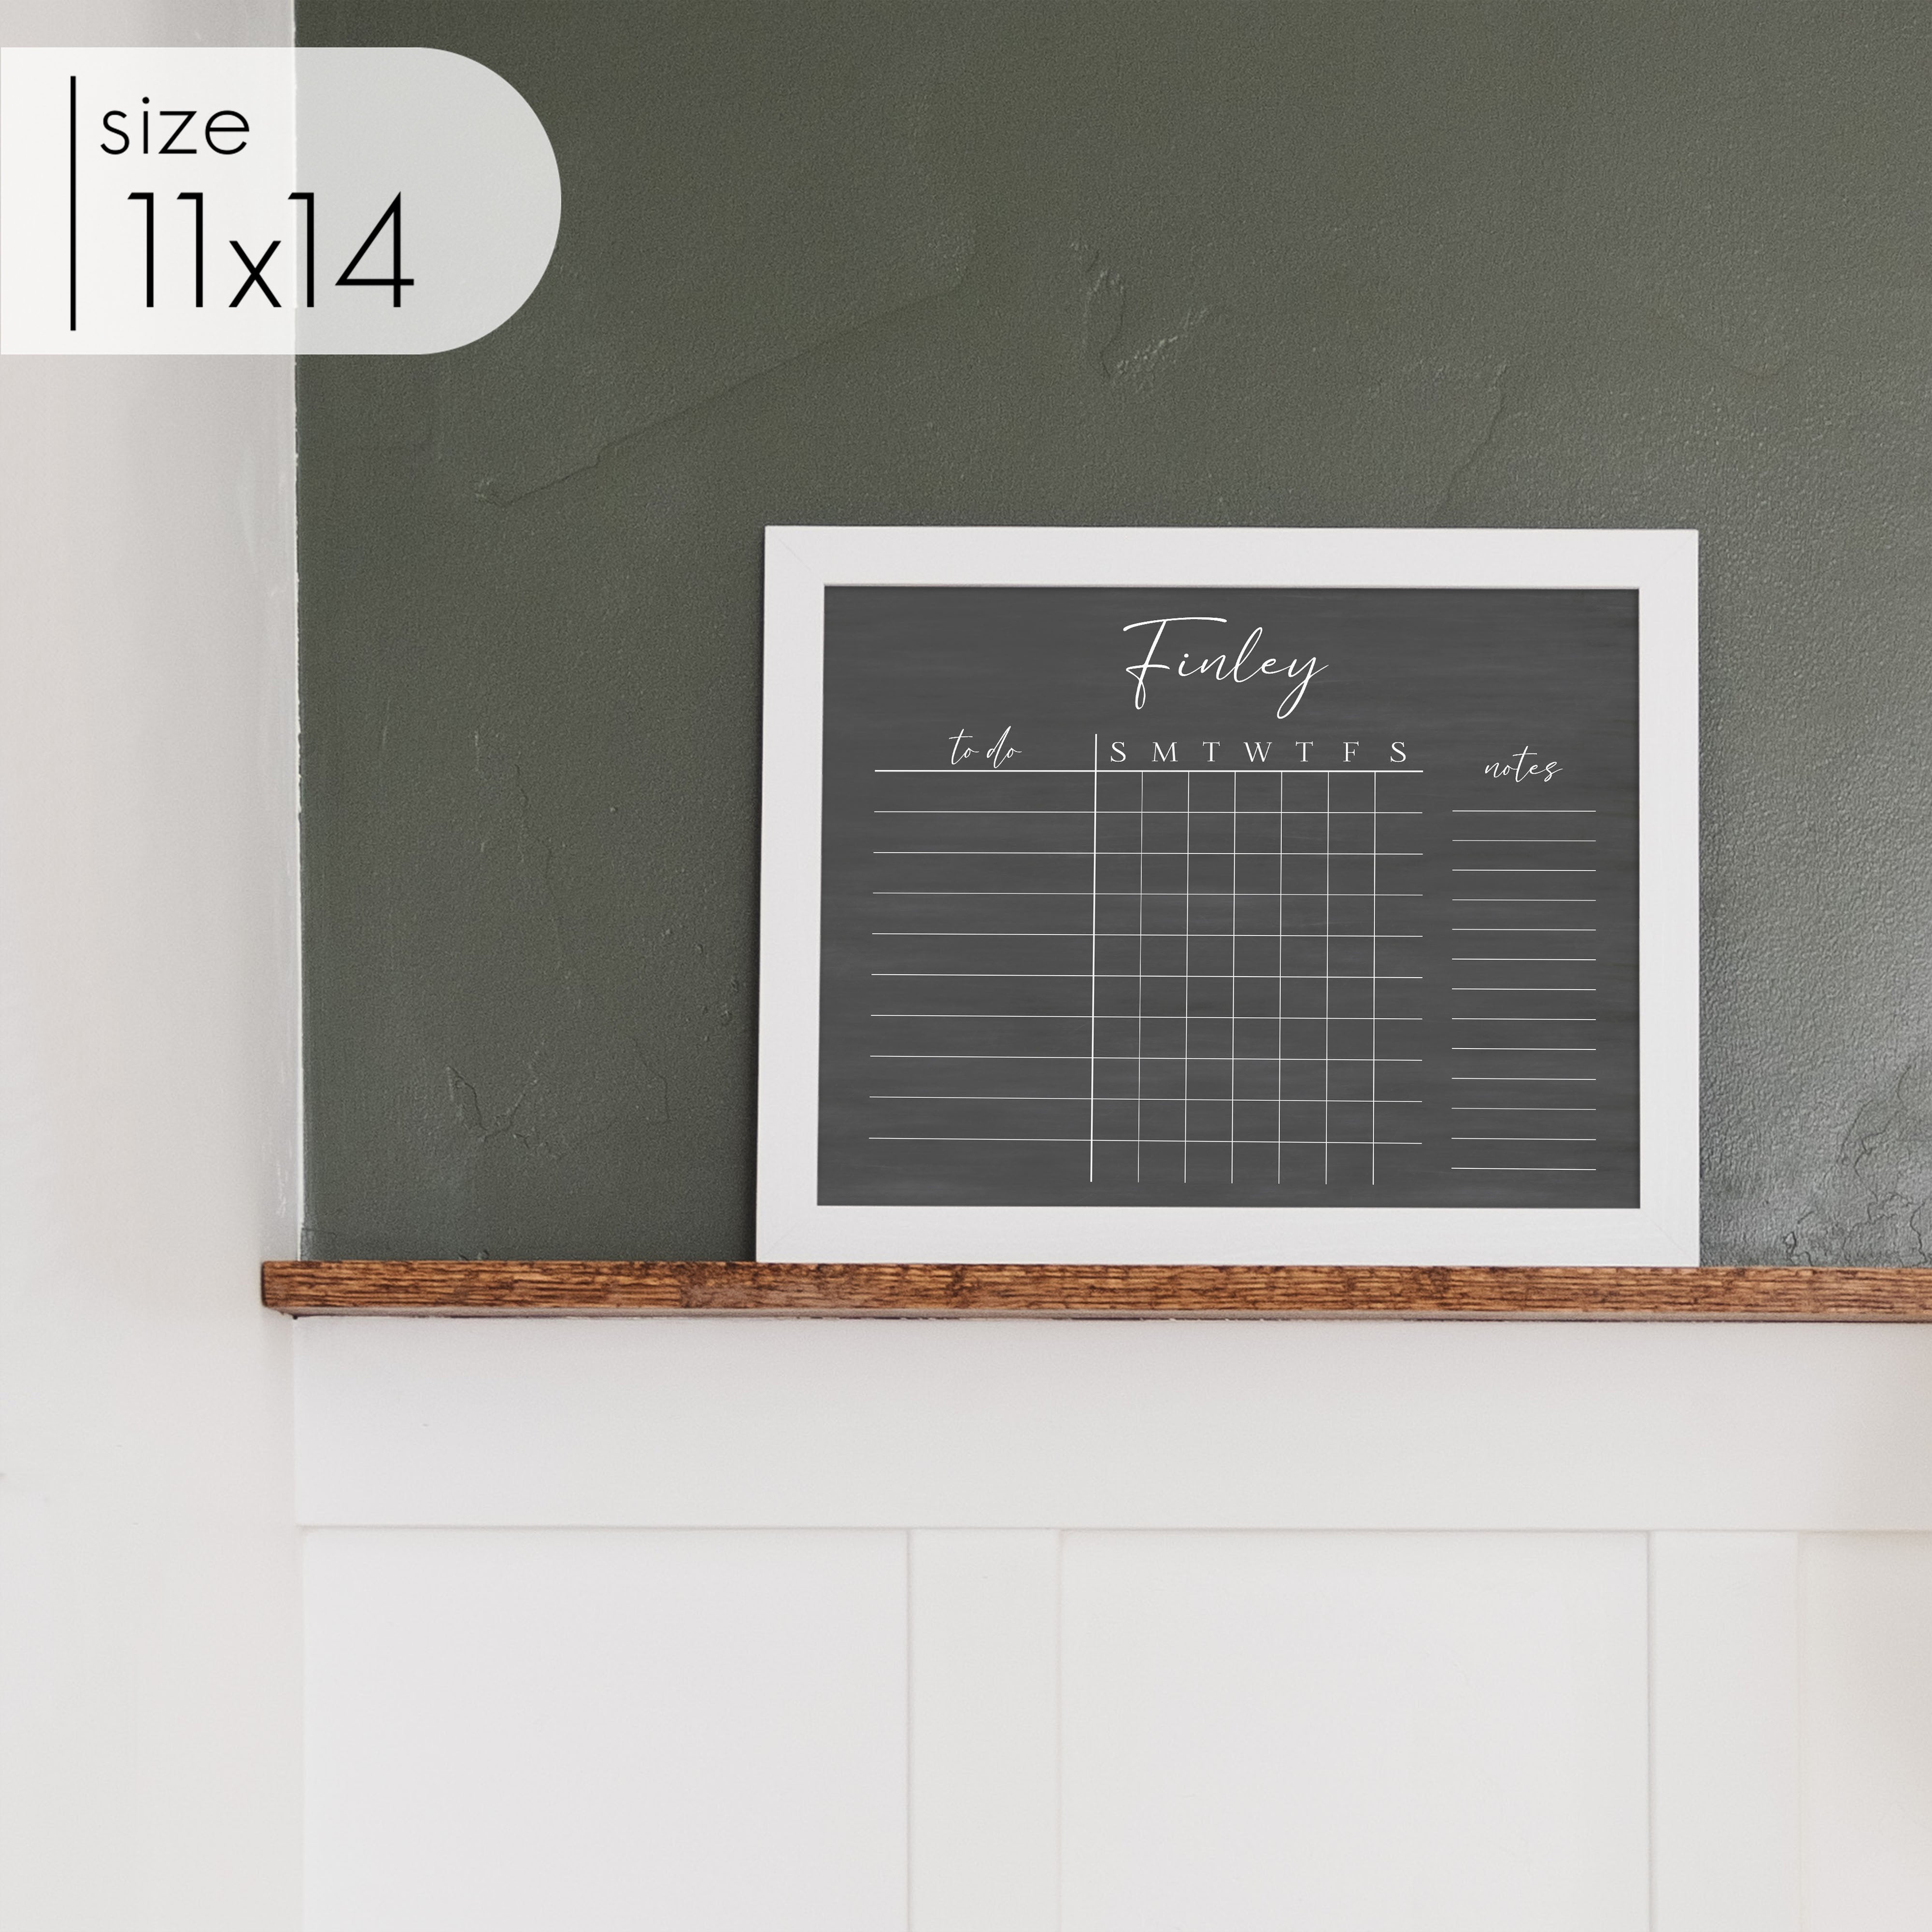 1 Person Framed Chalkboard Chore Chart | Horizontal Pennington